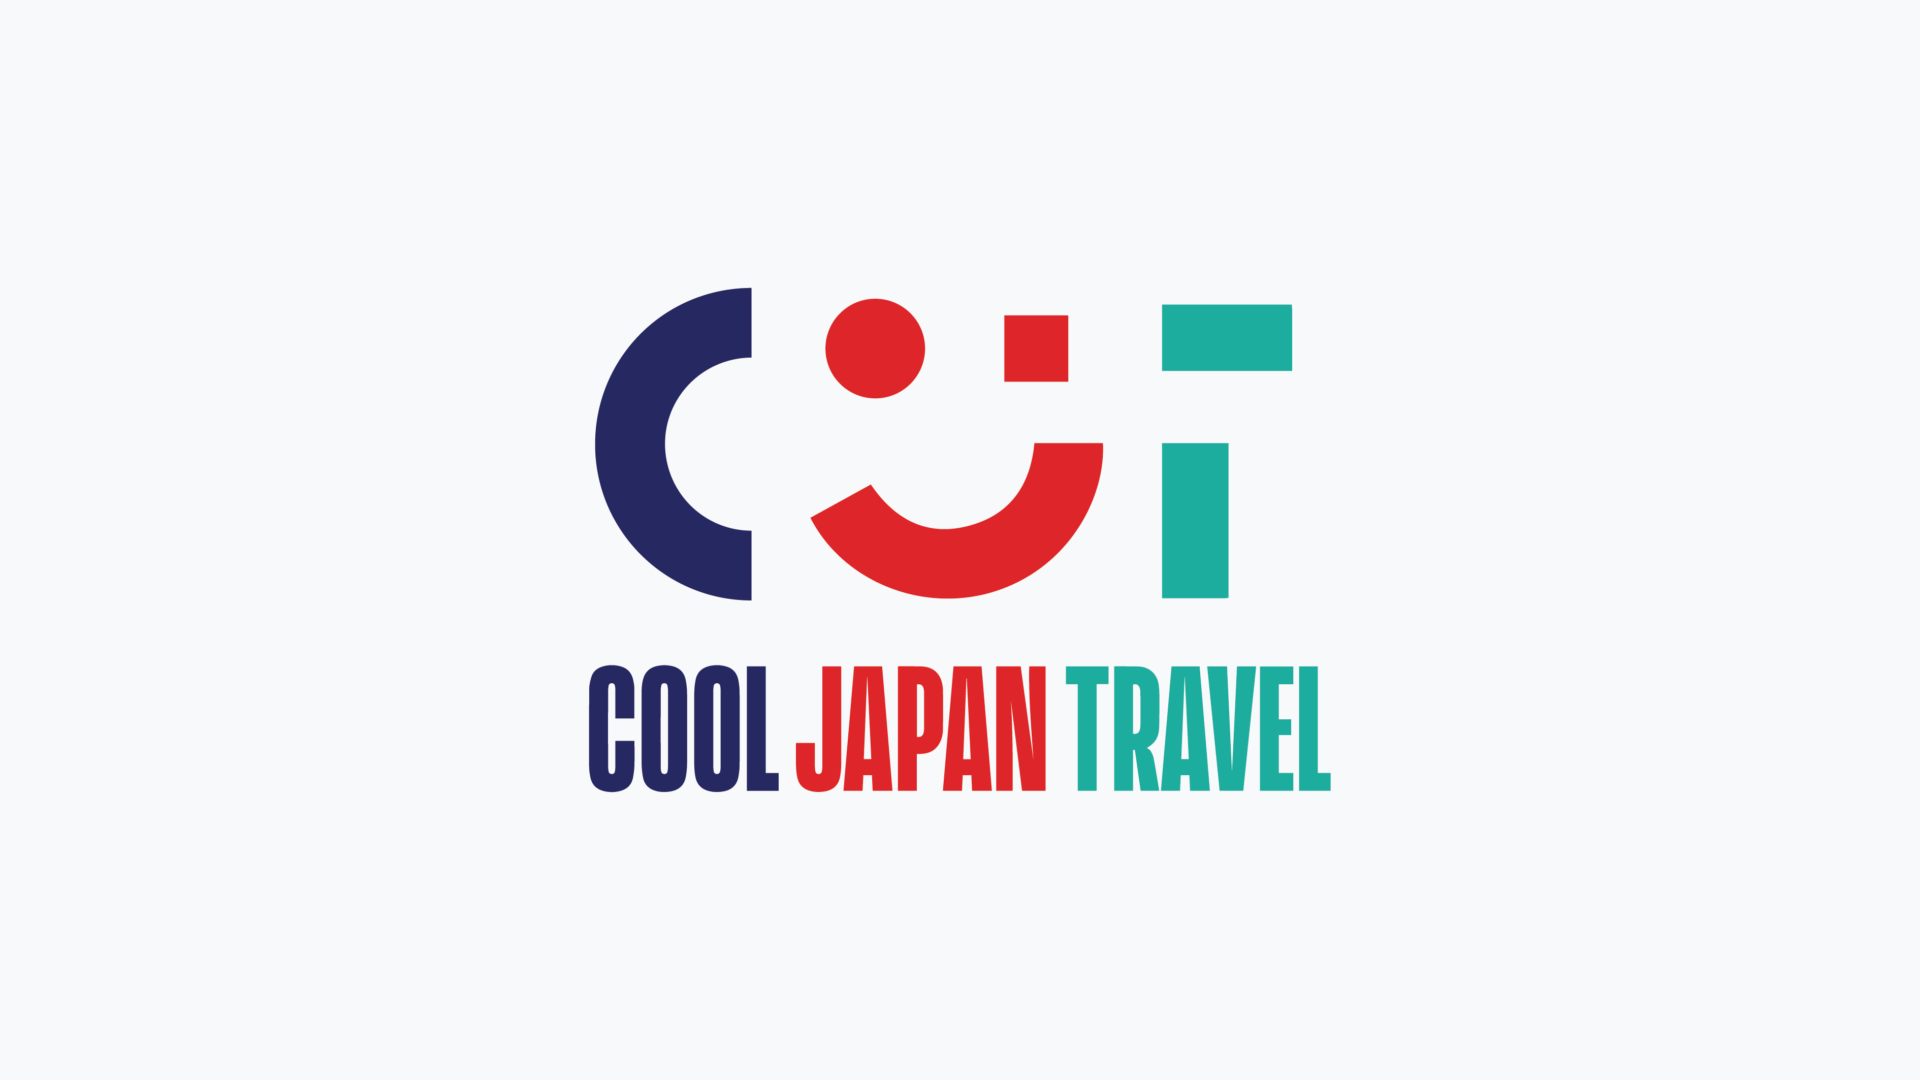 Cool Japan Travel